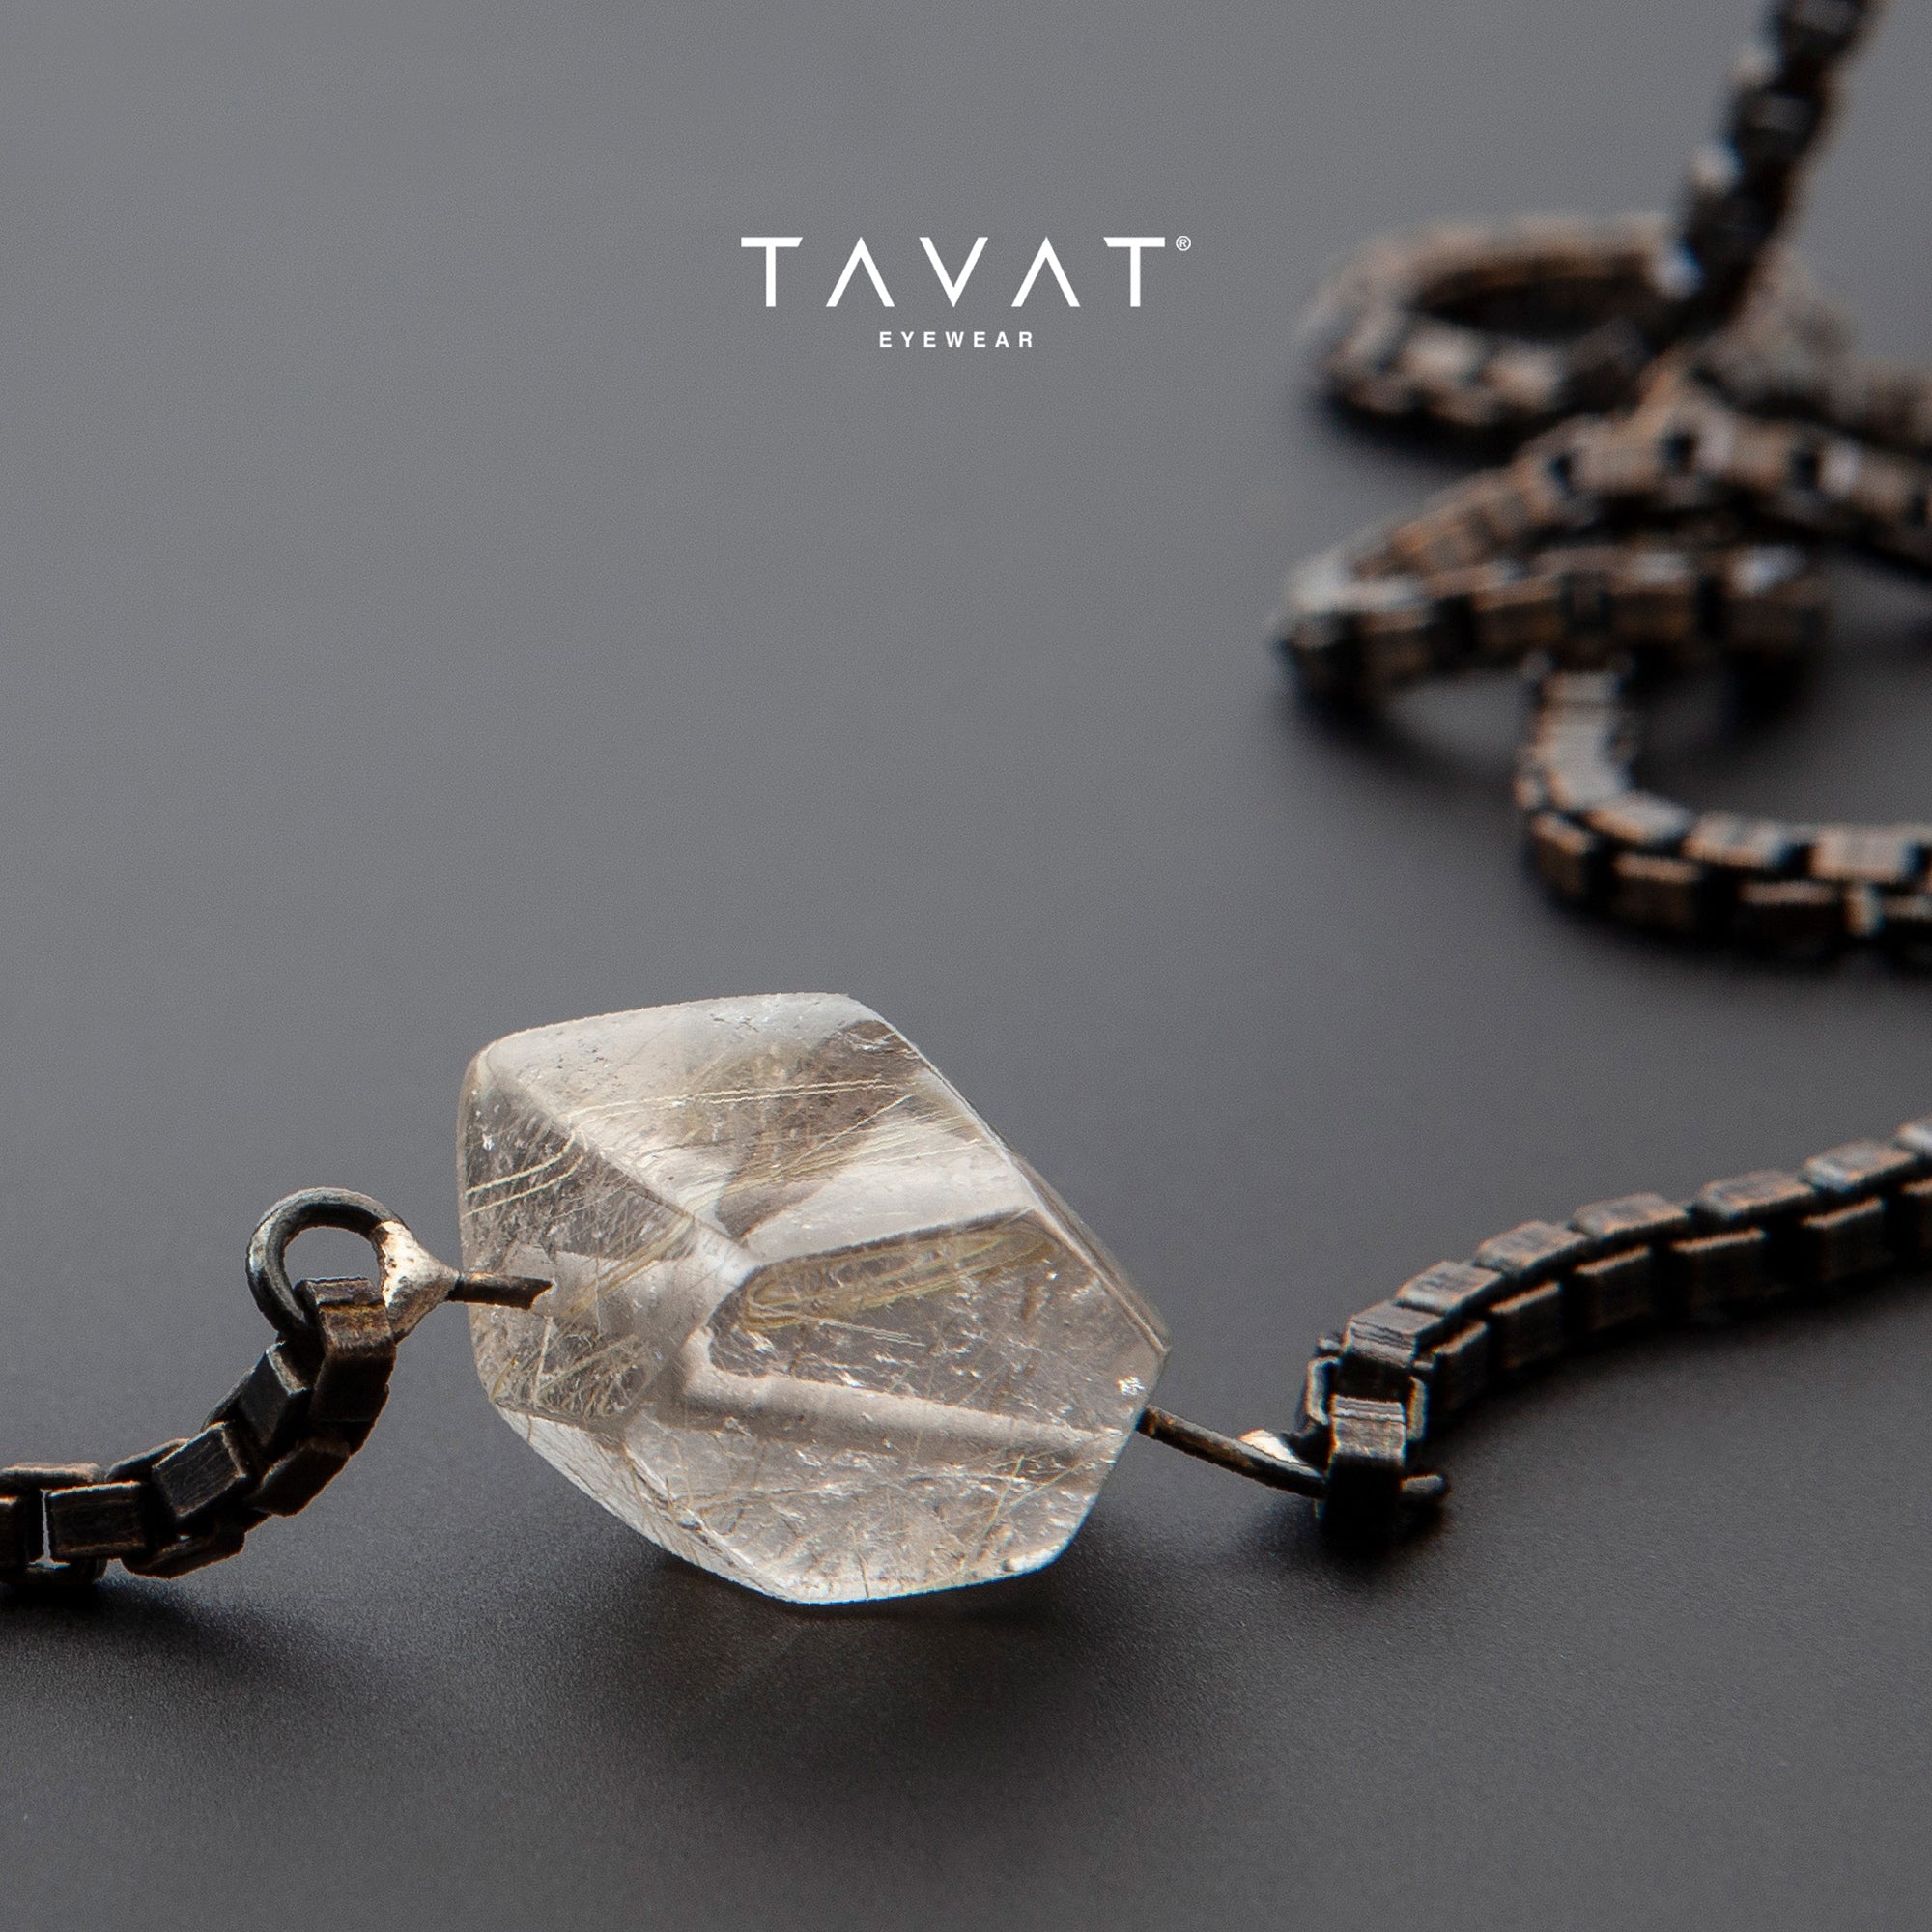 Tavat - Pantos 2.0 C SC117 Gemstone Limited-GDN【Limited Edition】